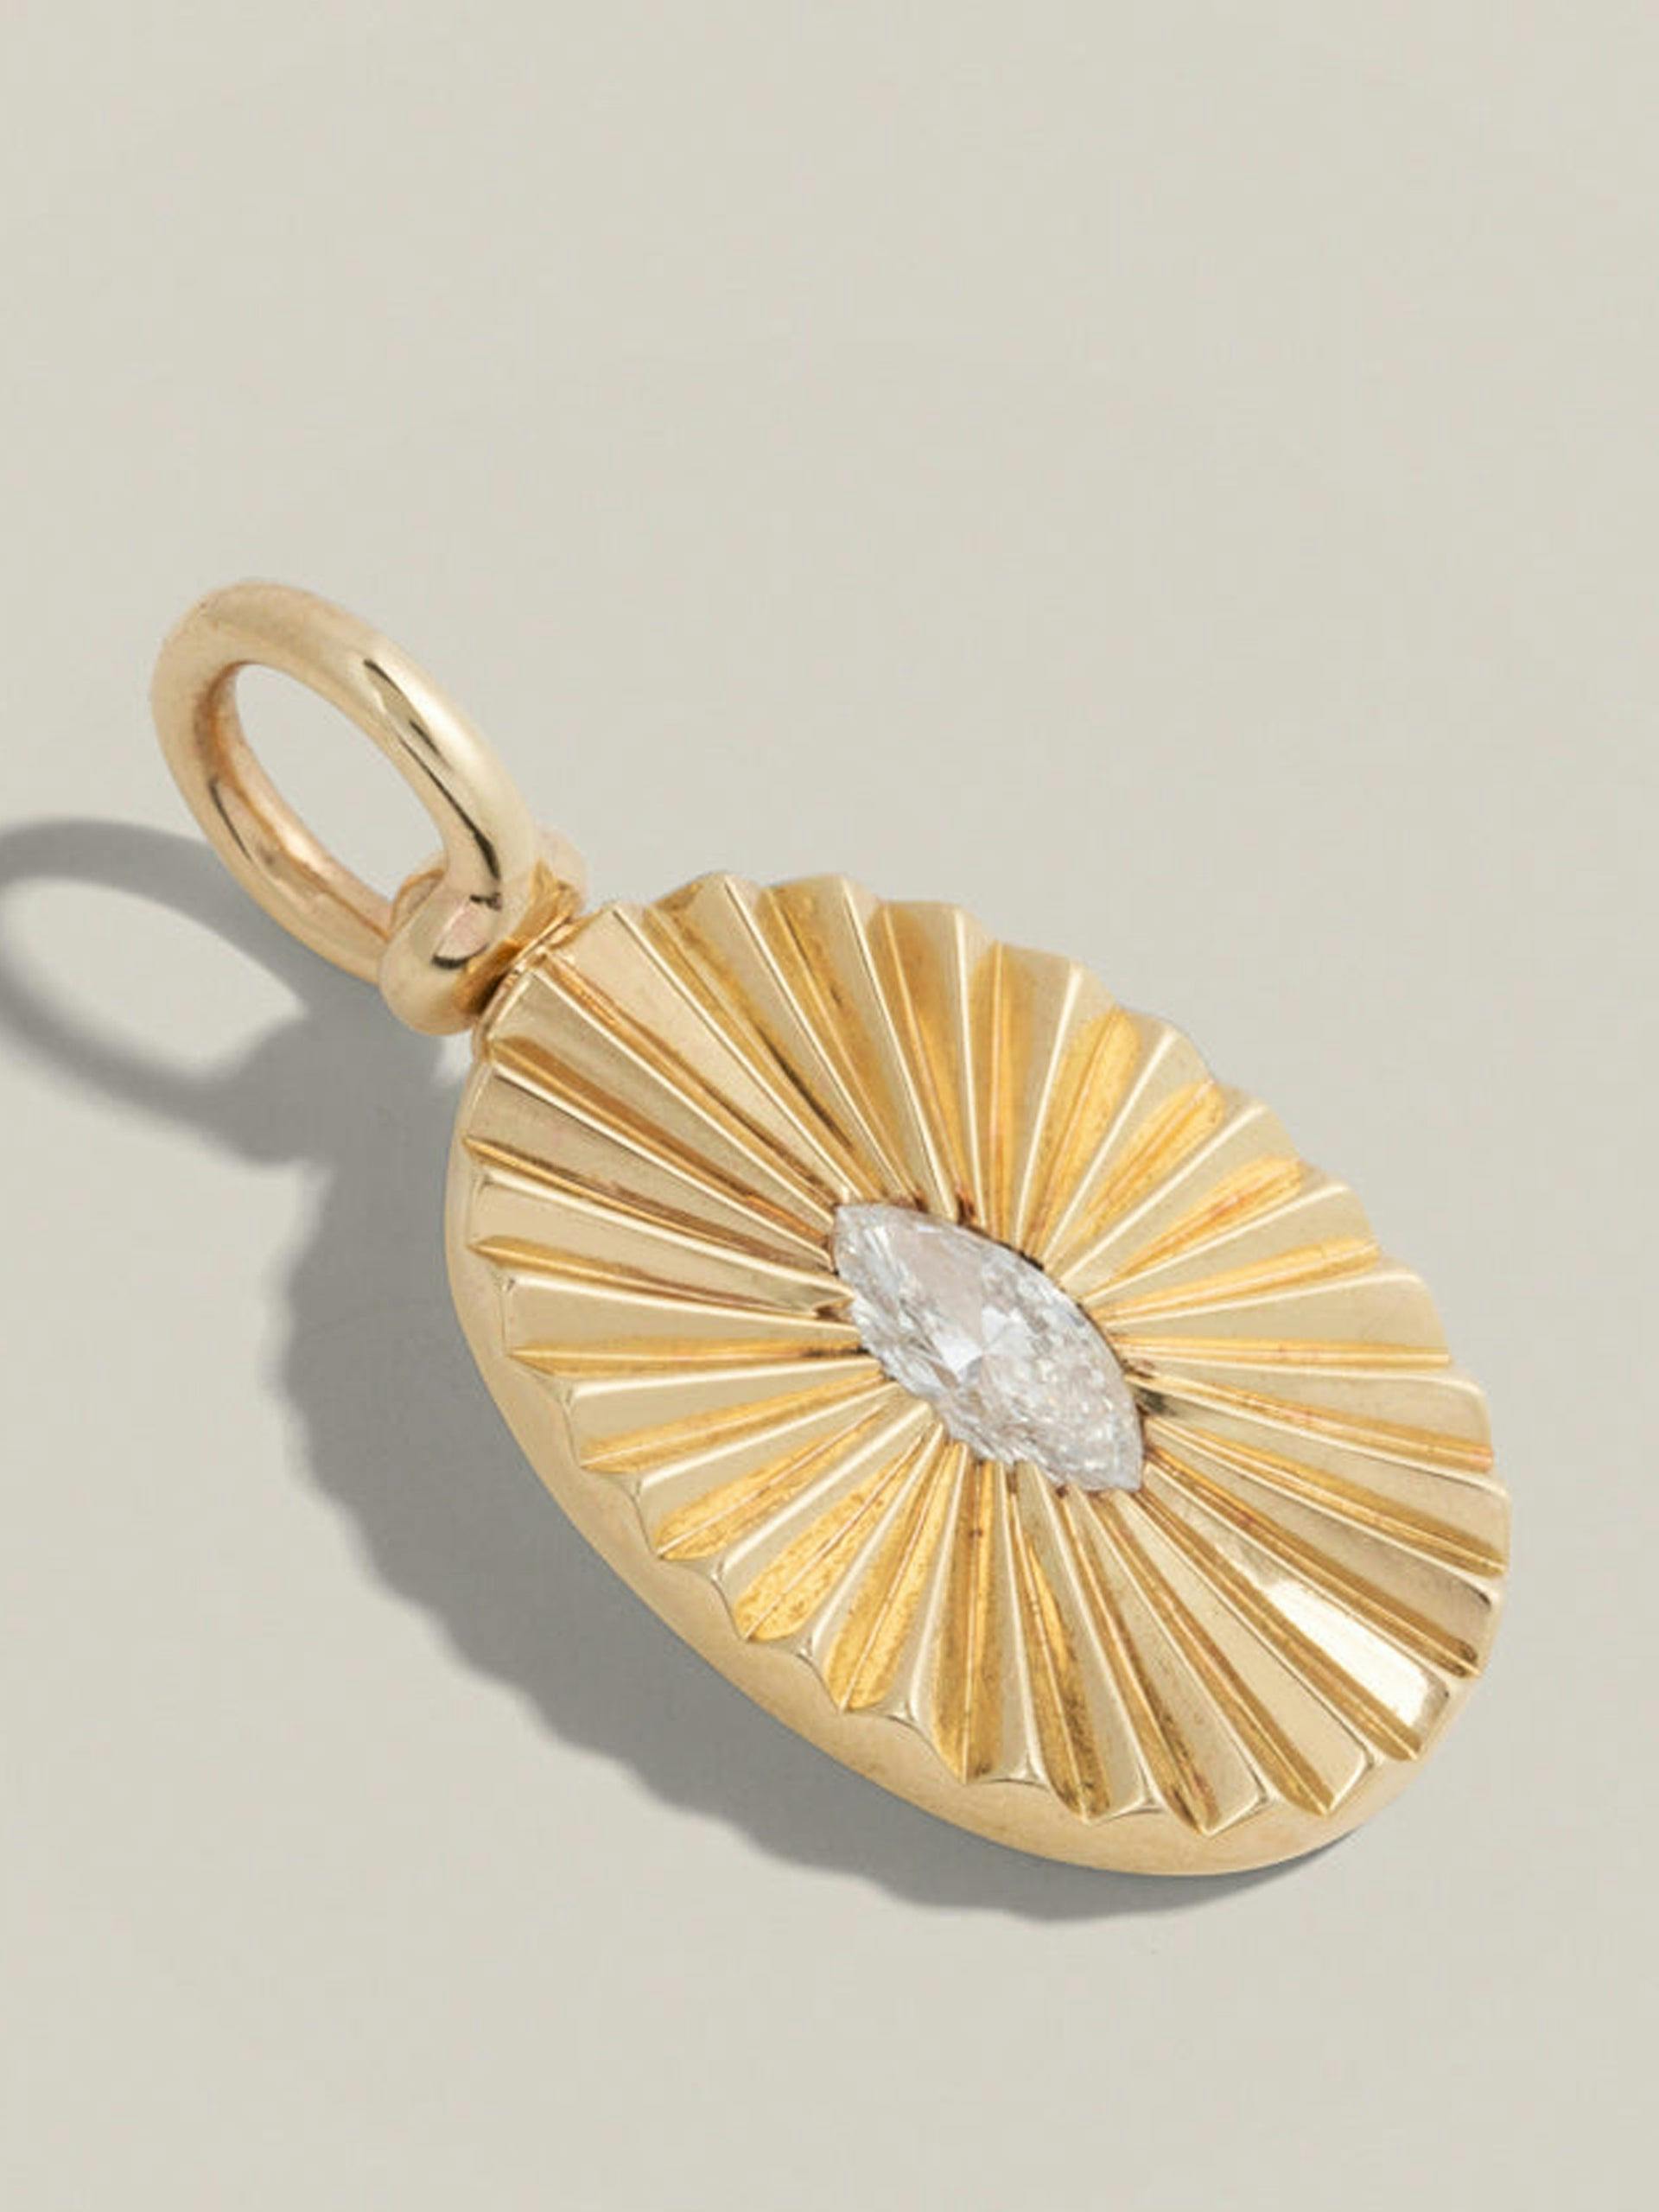 Sunray gold and diamond pendant